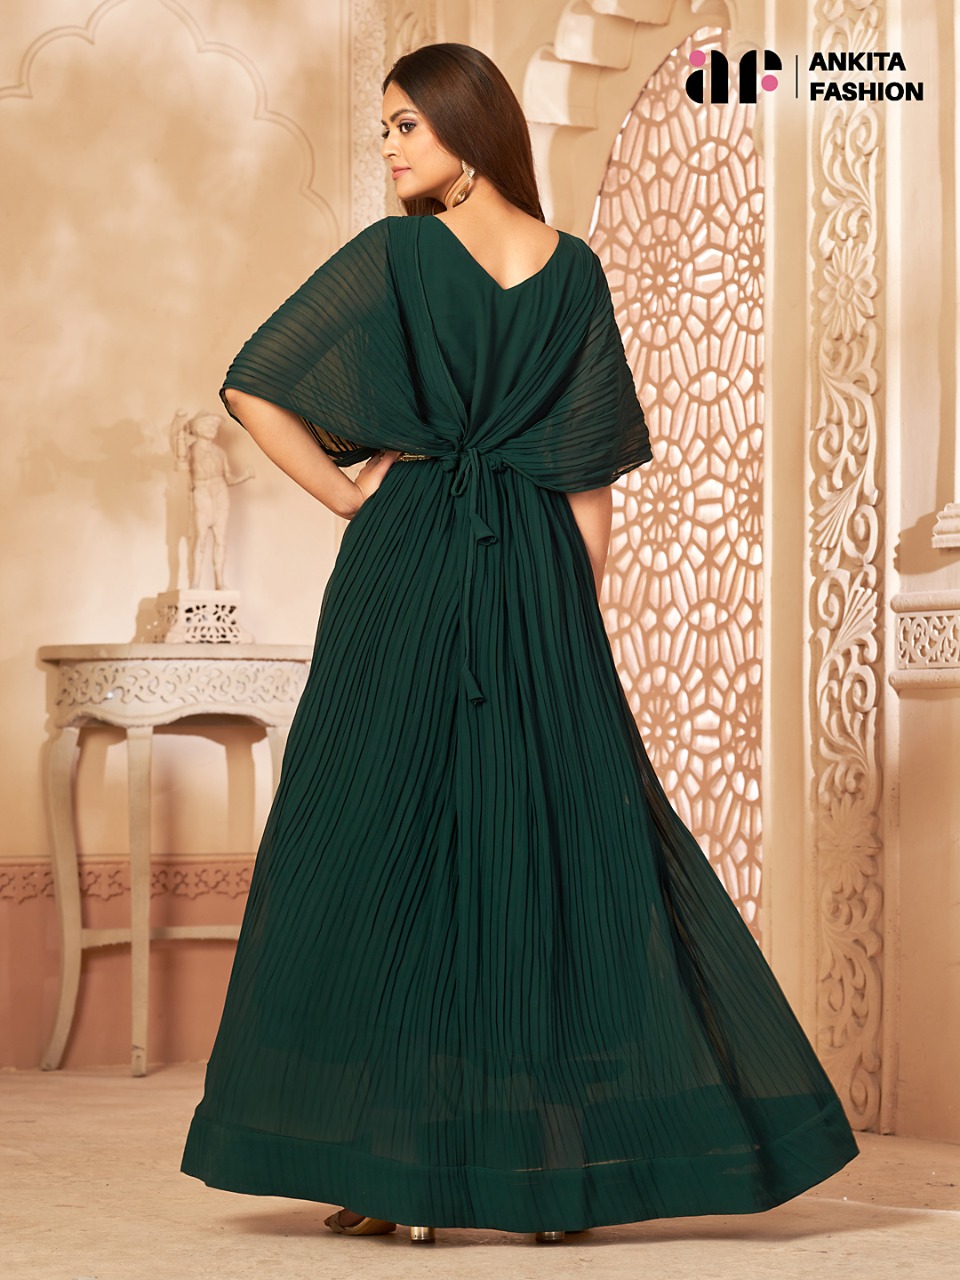 ankita fashion anamika georgette elegant top with dupatta catalog